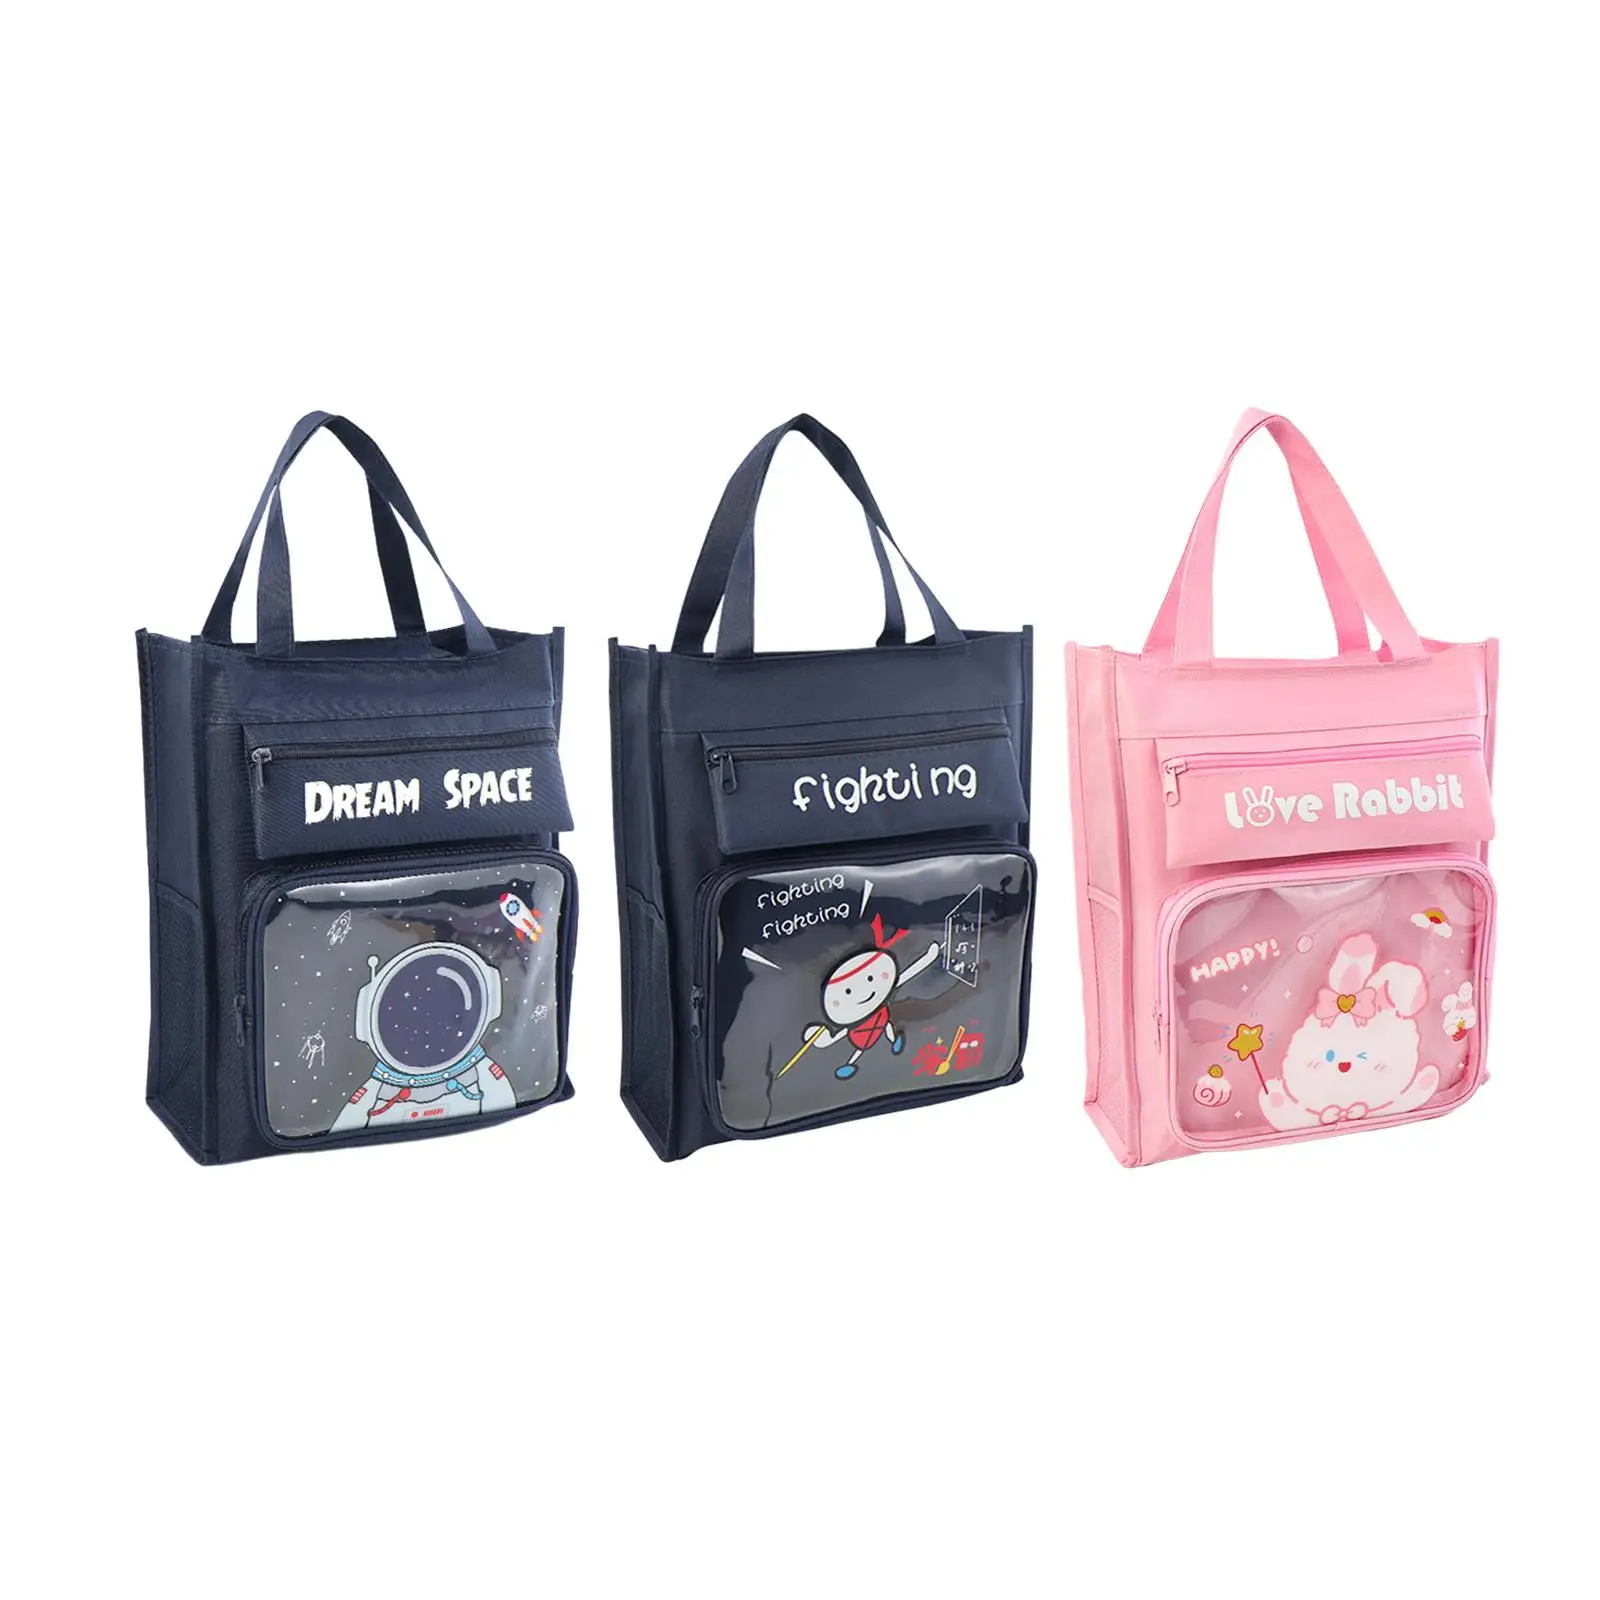 Kids Tote Bag Large Capacity Top Handle Shopping Bag Cute Shoulder Bag Handbag for Students Preschool Travel Classroom Home